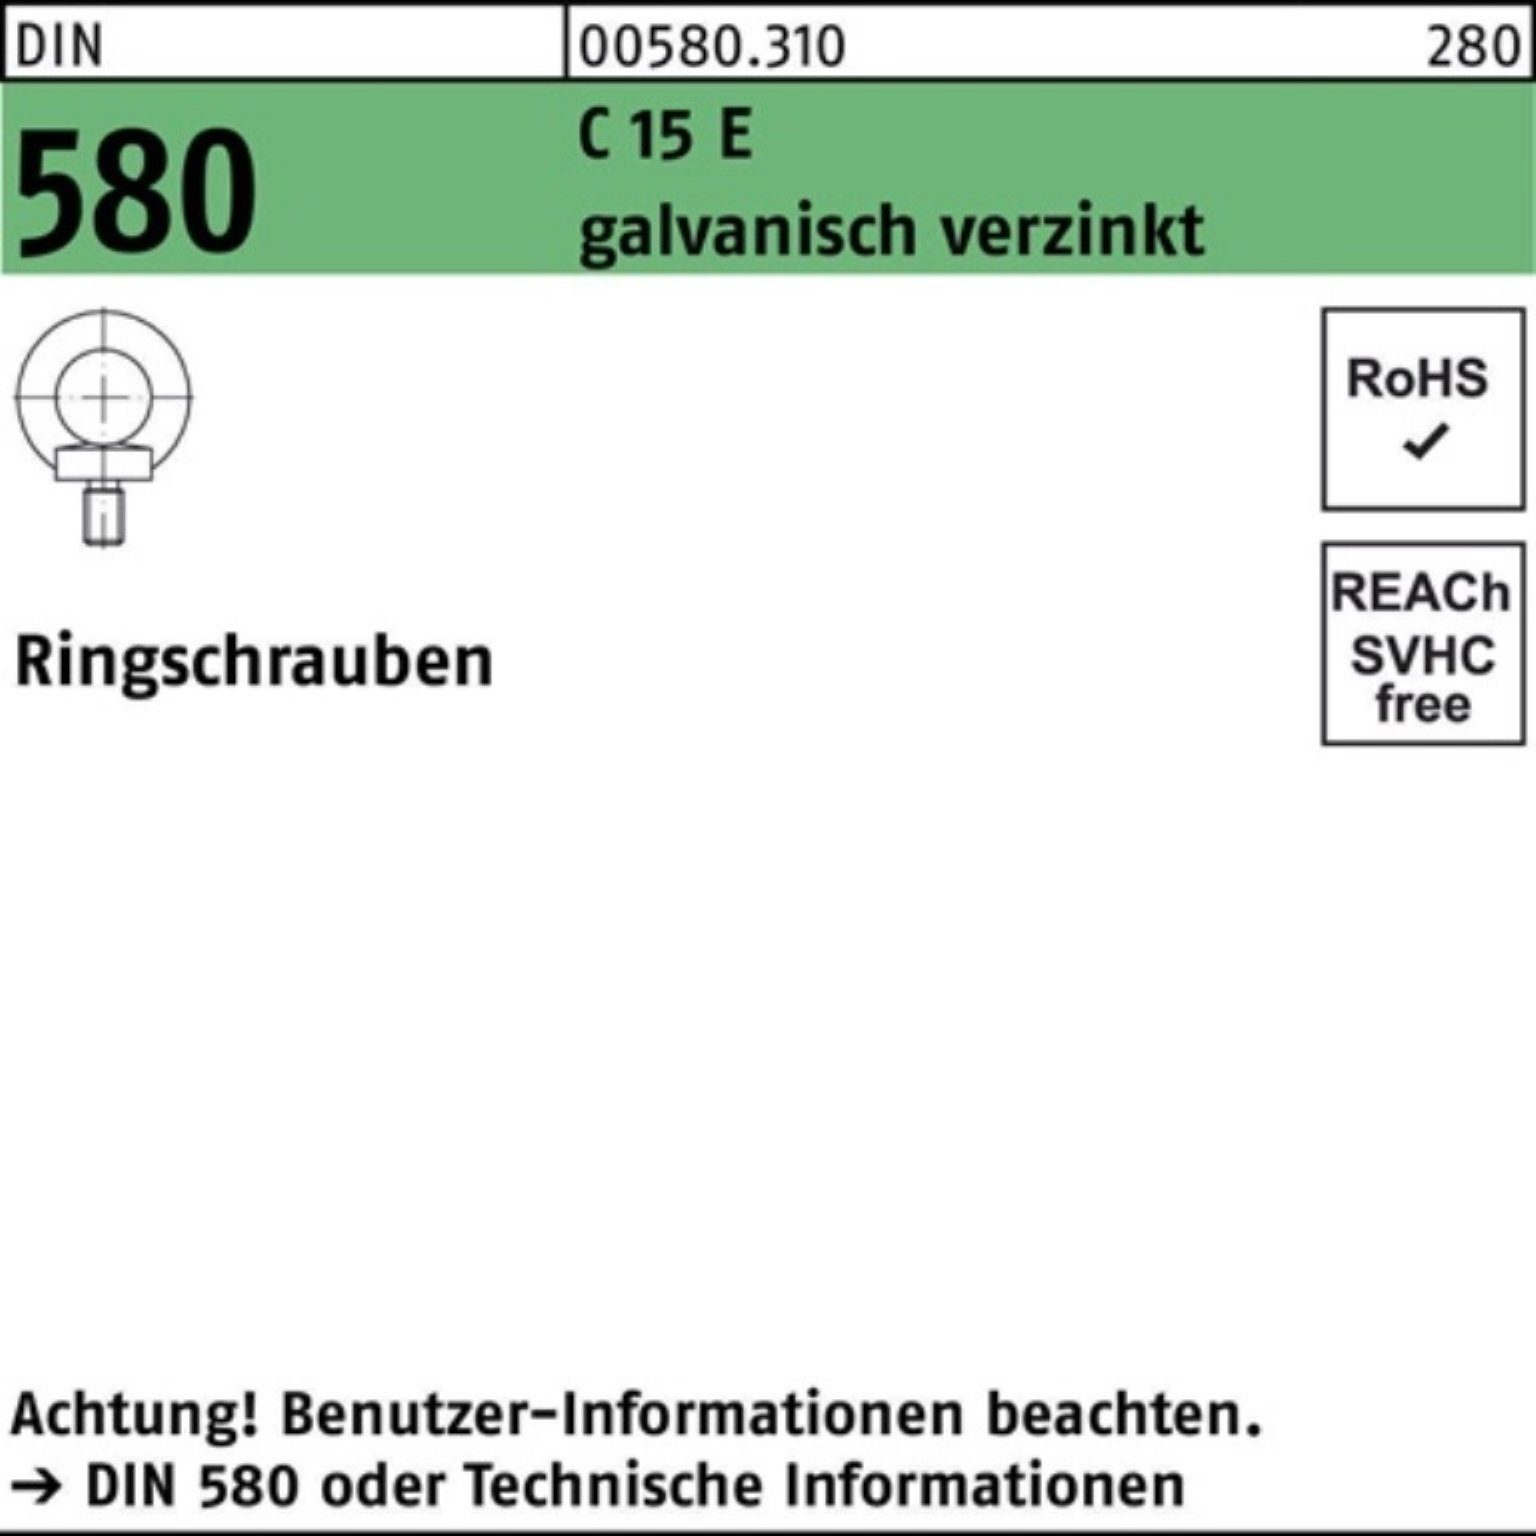 Reyher Schraube 100er Pack Ringschraube DIN 580 M36 C 15 E galv.verz. 1 Stück DIN 580 | Schrauben